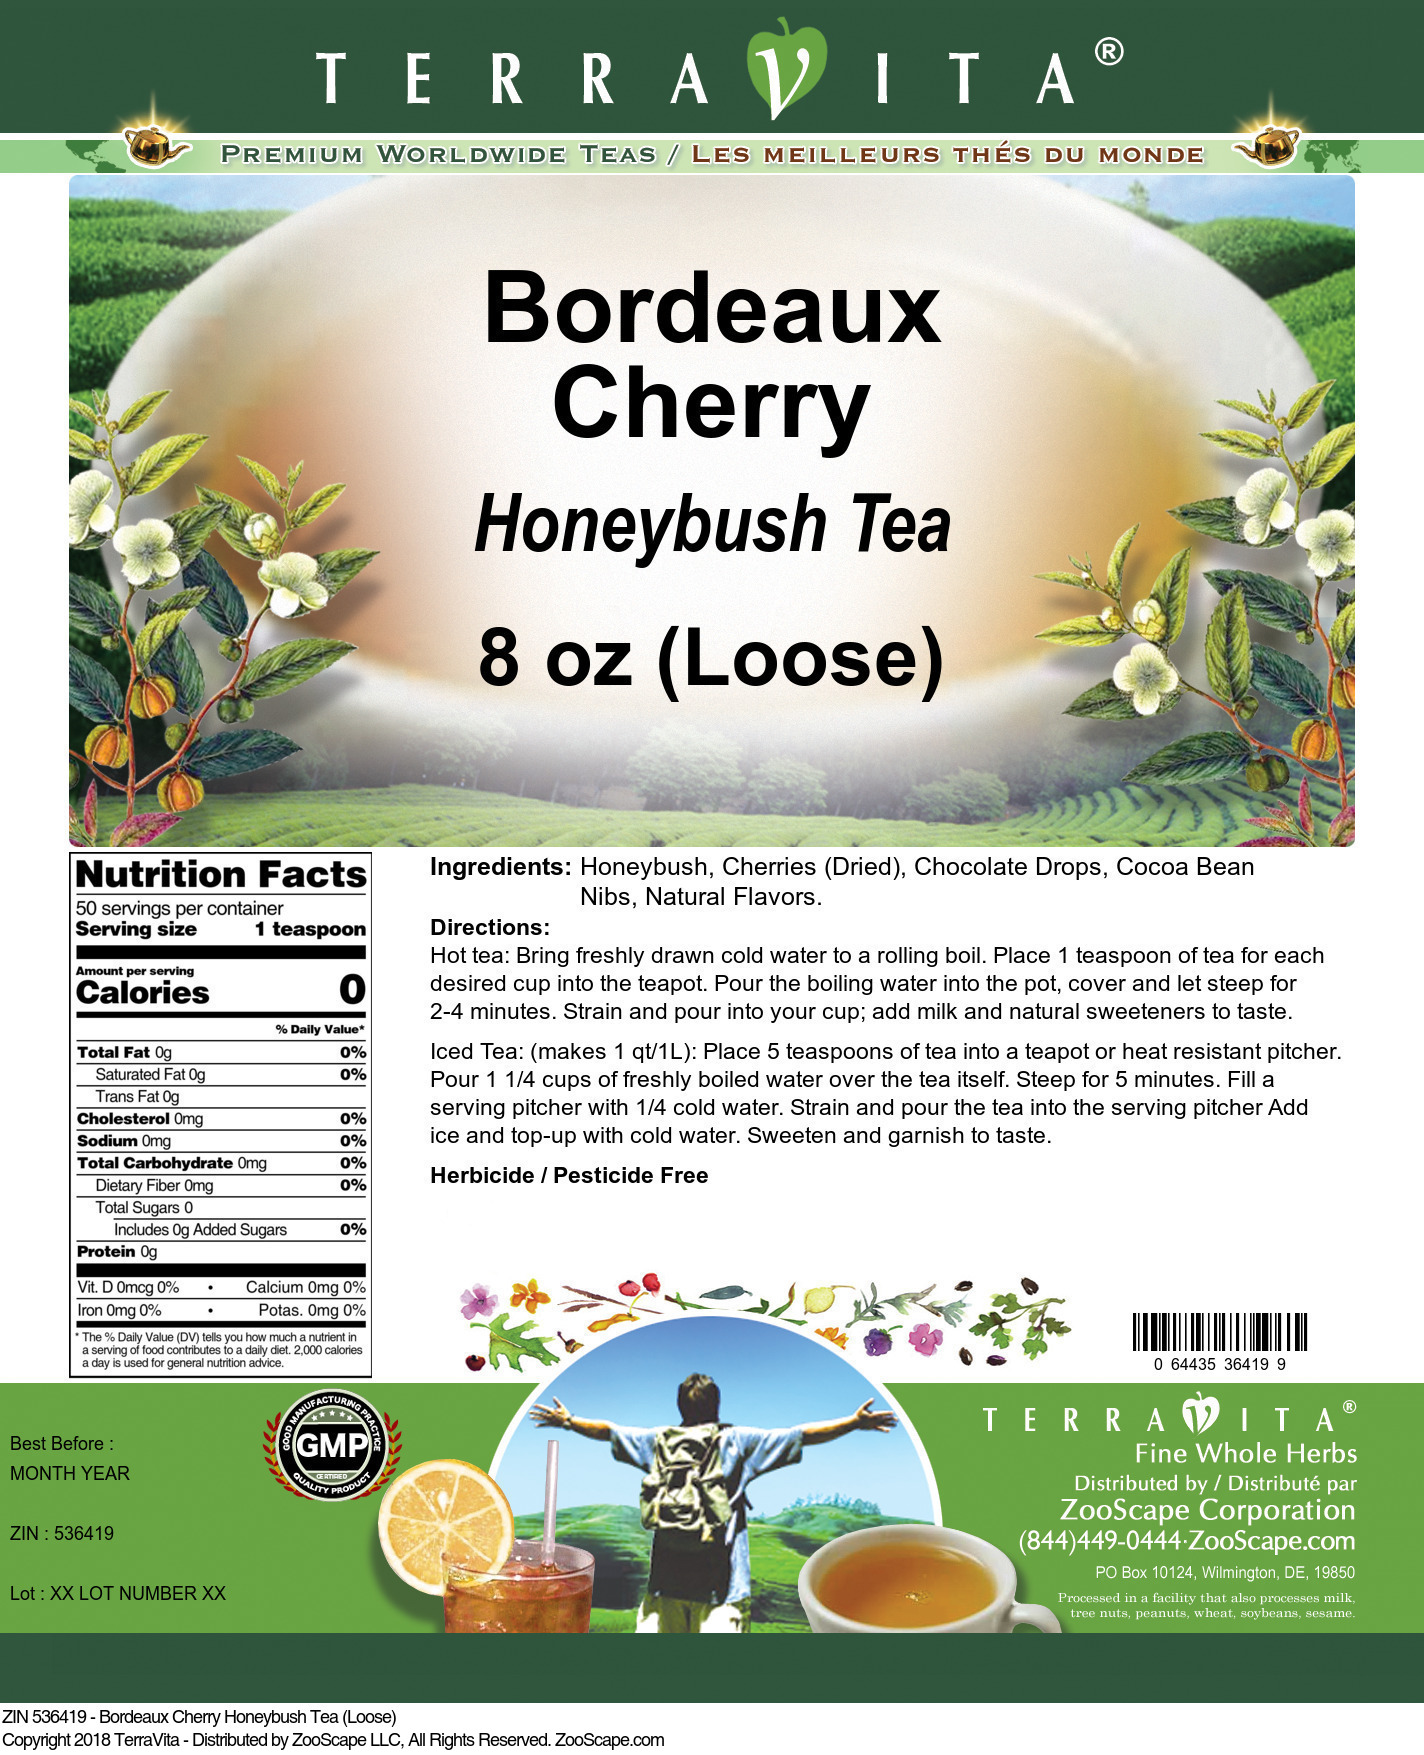 Bordeaux Cherry Honeybush Tea (Loose) - Label